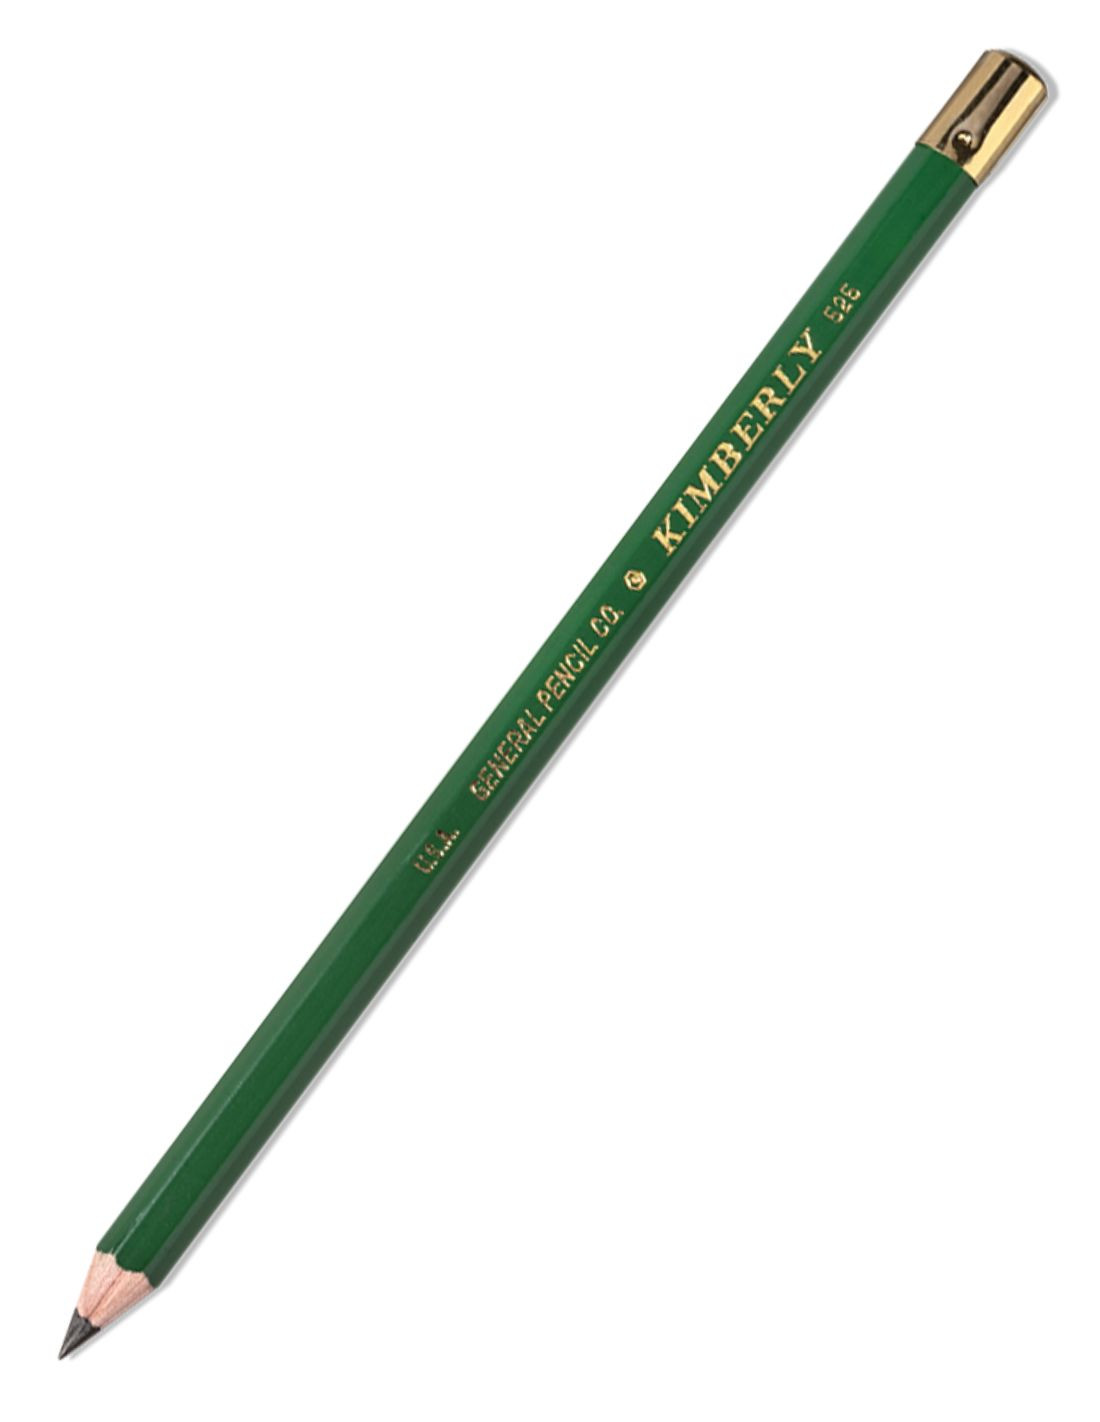 Crayon graphite 4B - Kimberly 525 - General Pencil Company|Papeterie Makkura